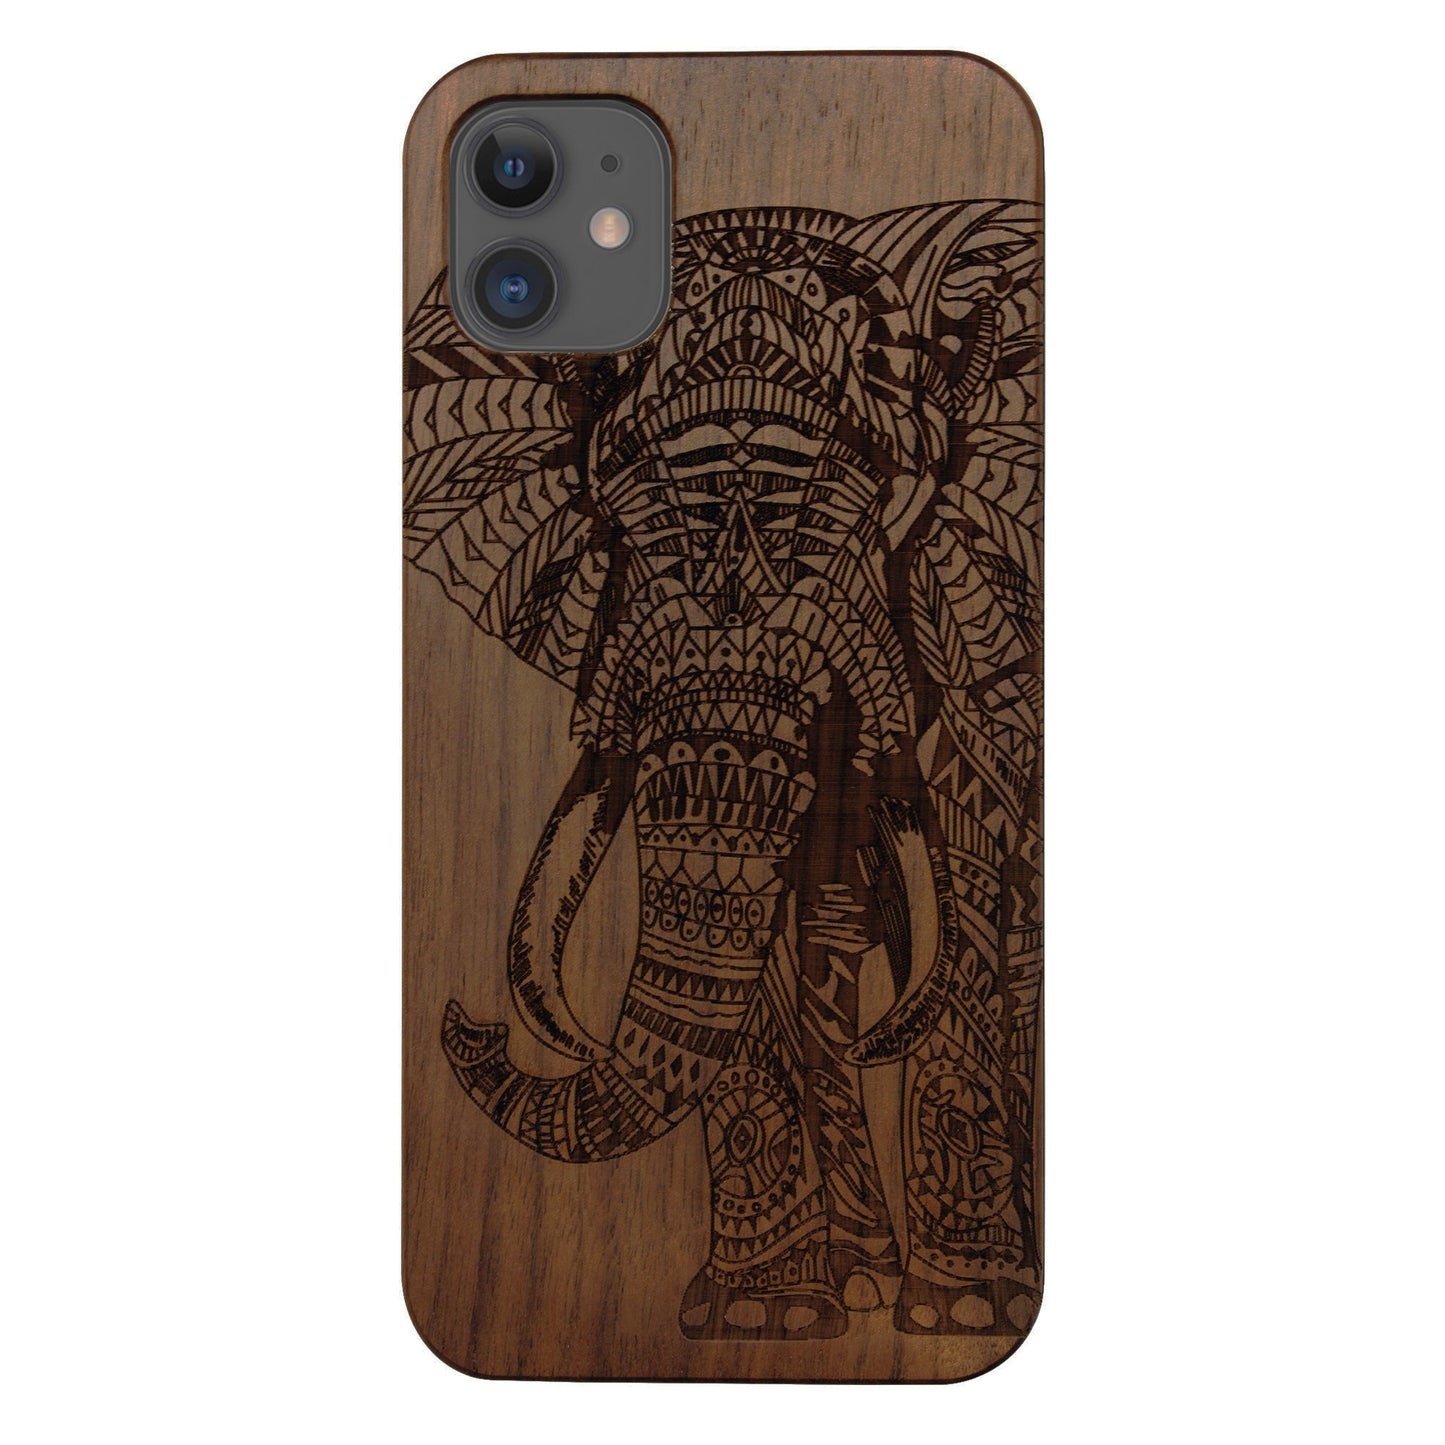 Elephant Eden case made of walnut wood